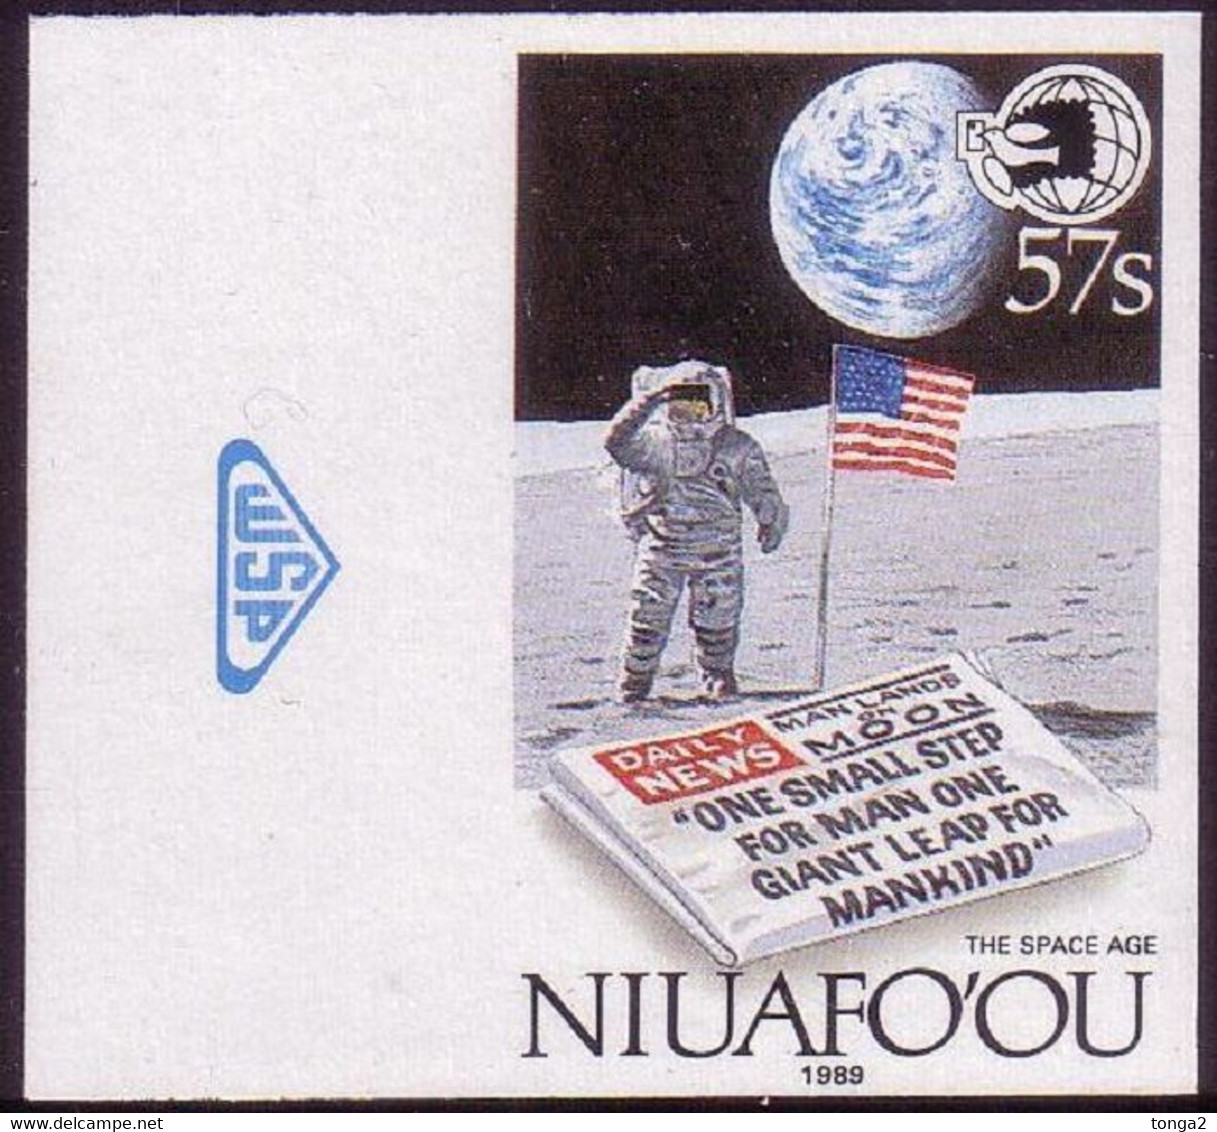 Tonga Niuafo'ou 1989 Apollo - First Man On Moon - Imperf Plate Proof - Oceania